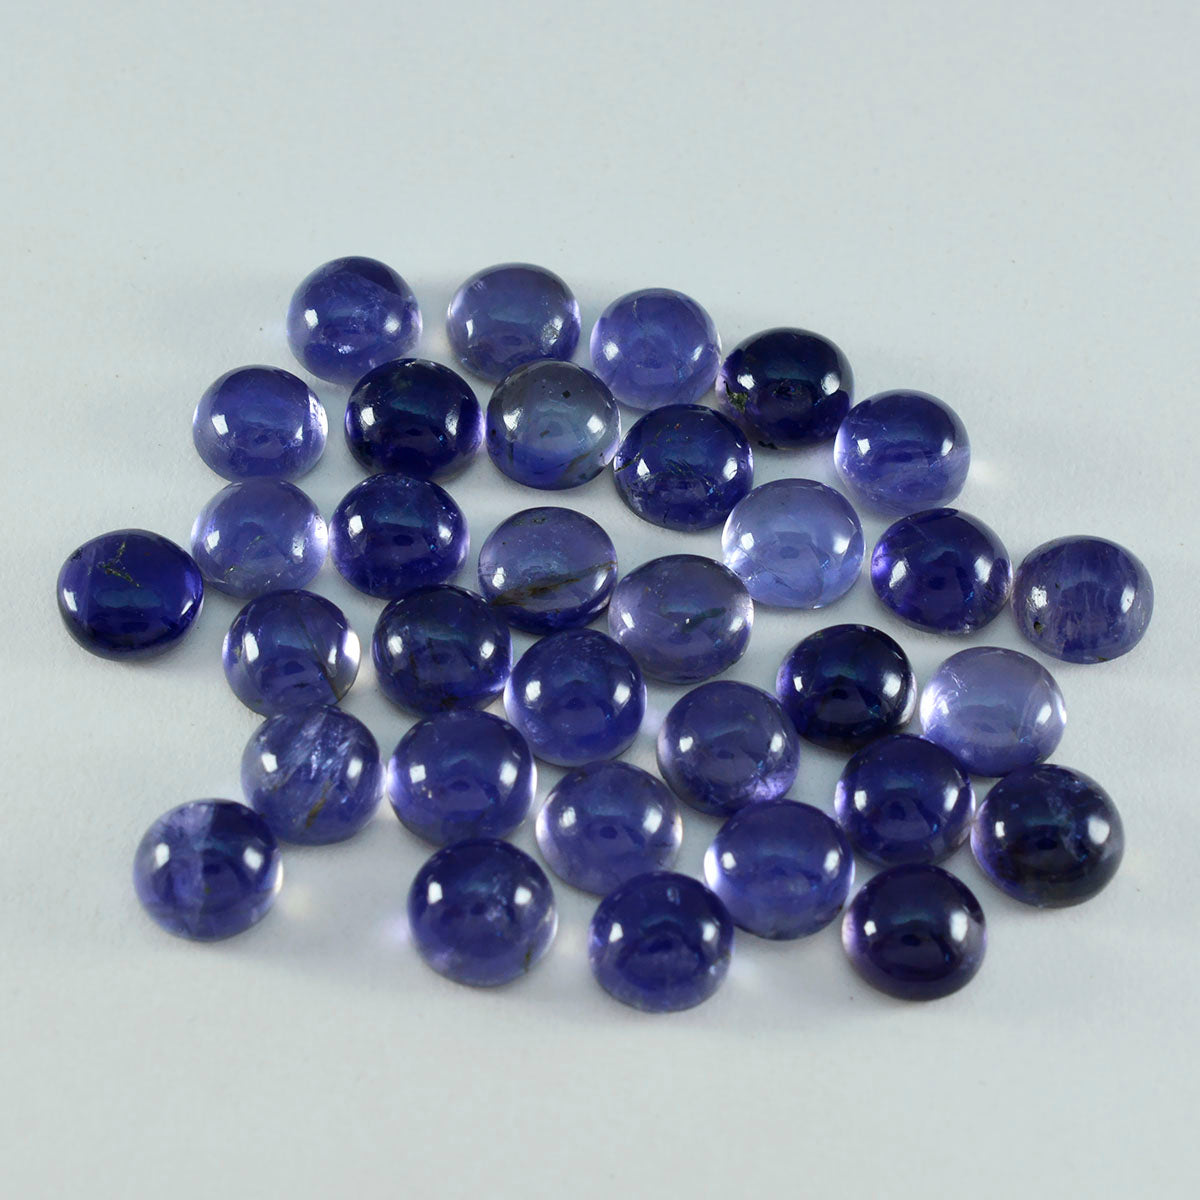 riyogems 1pc cabochon di iolite blu 7x7 mm forma rotonda gemma sfusa di qualità A+